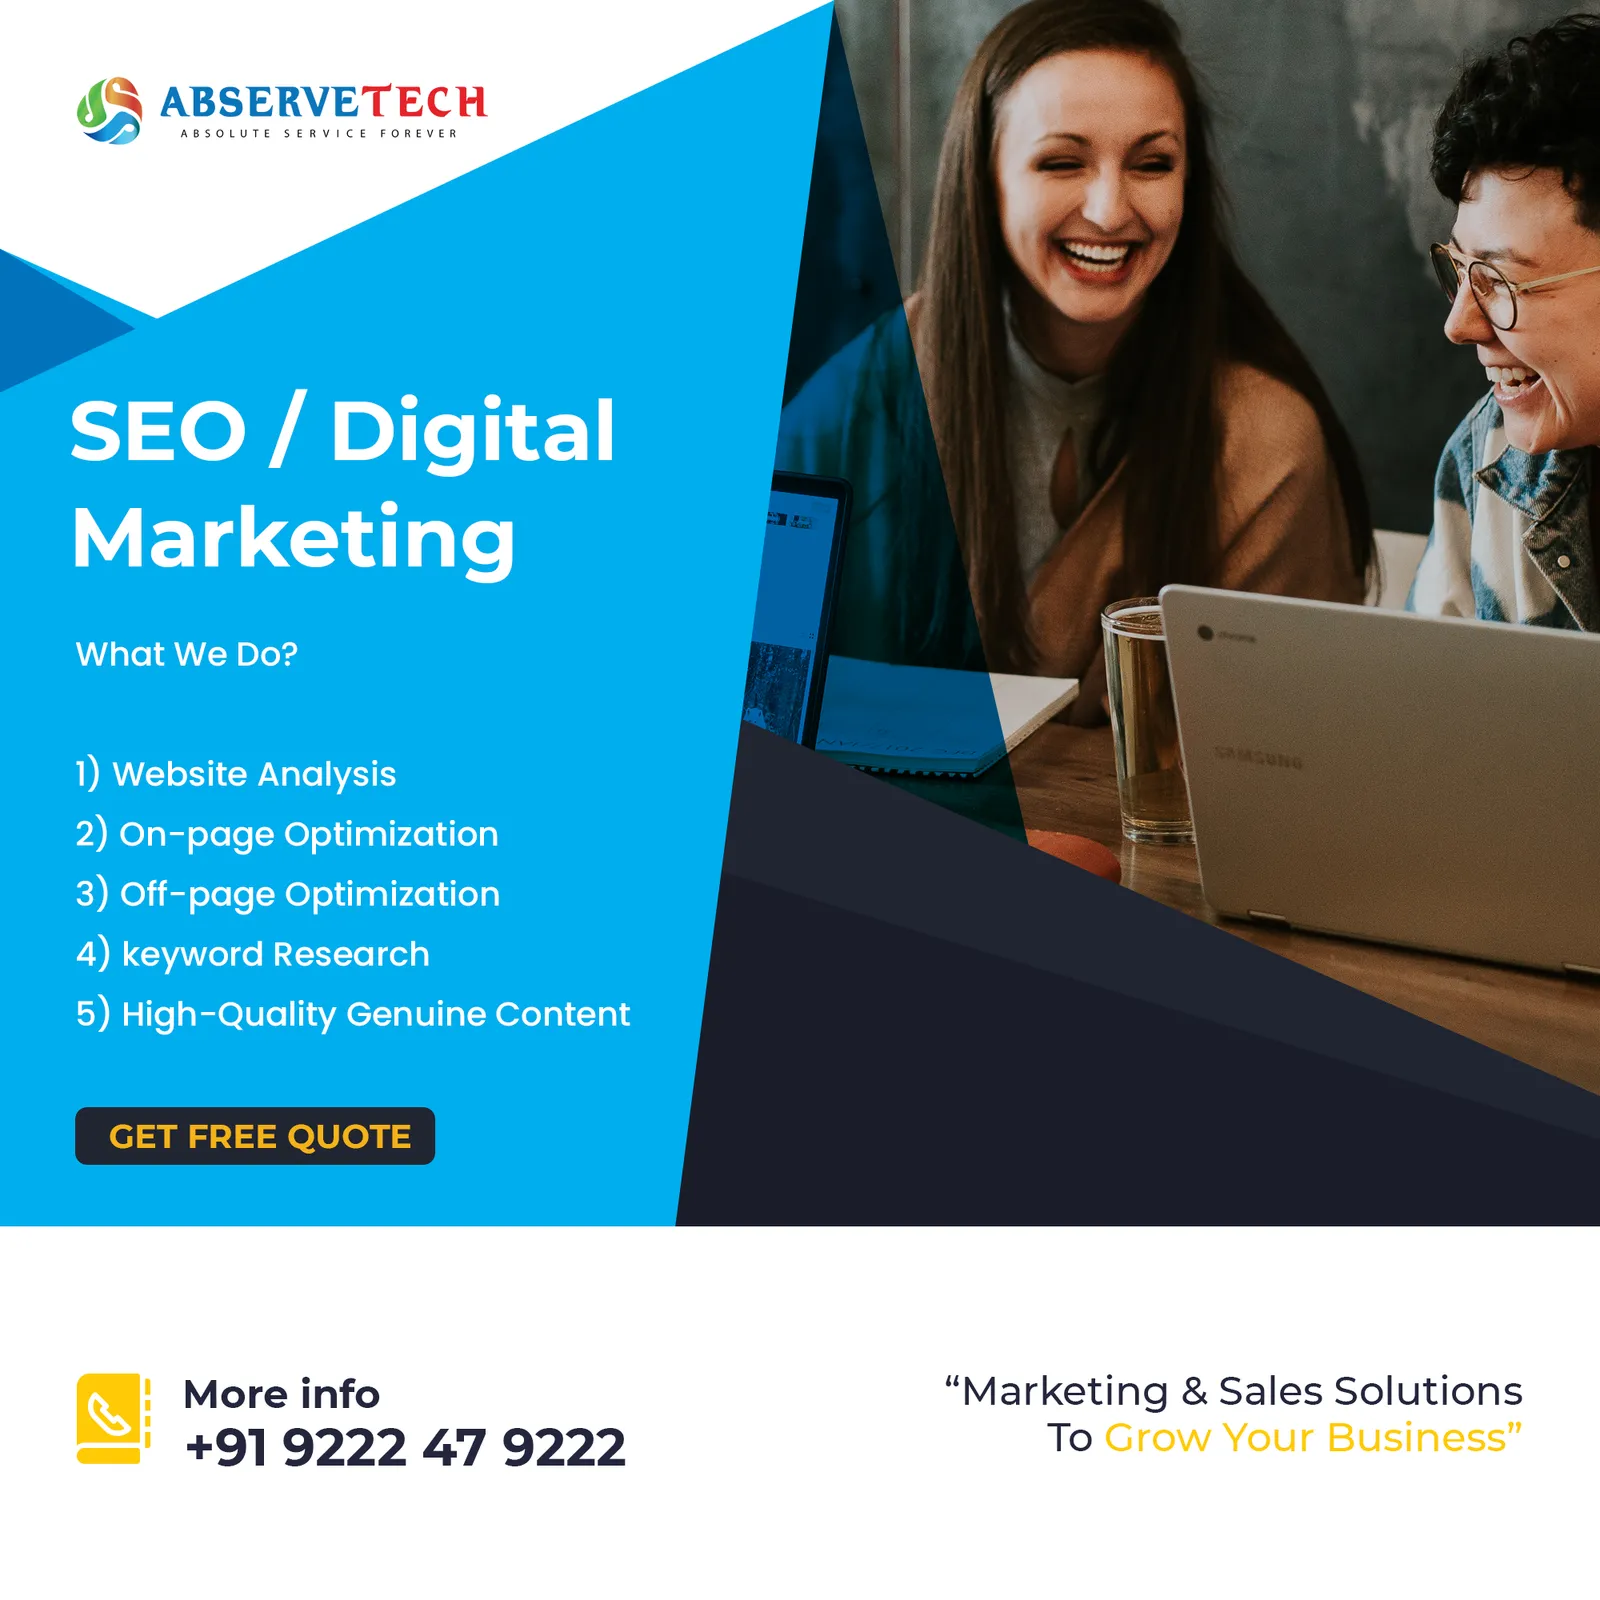 Get SEO / Digital Marketing Services From Abservetech 